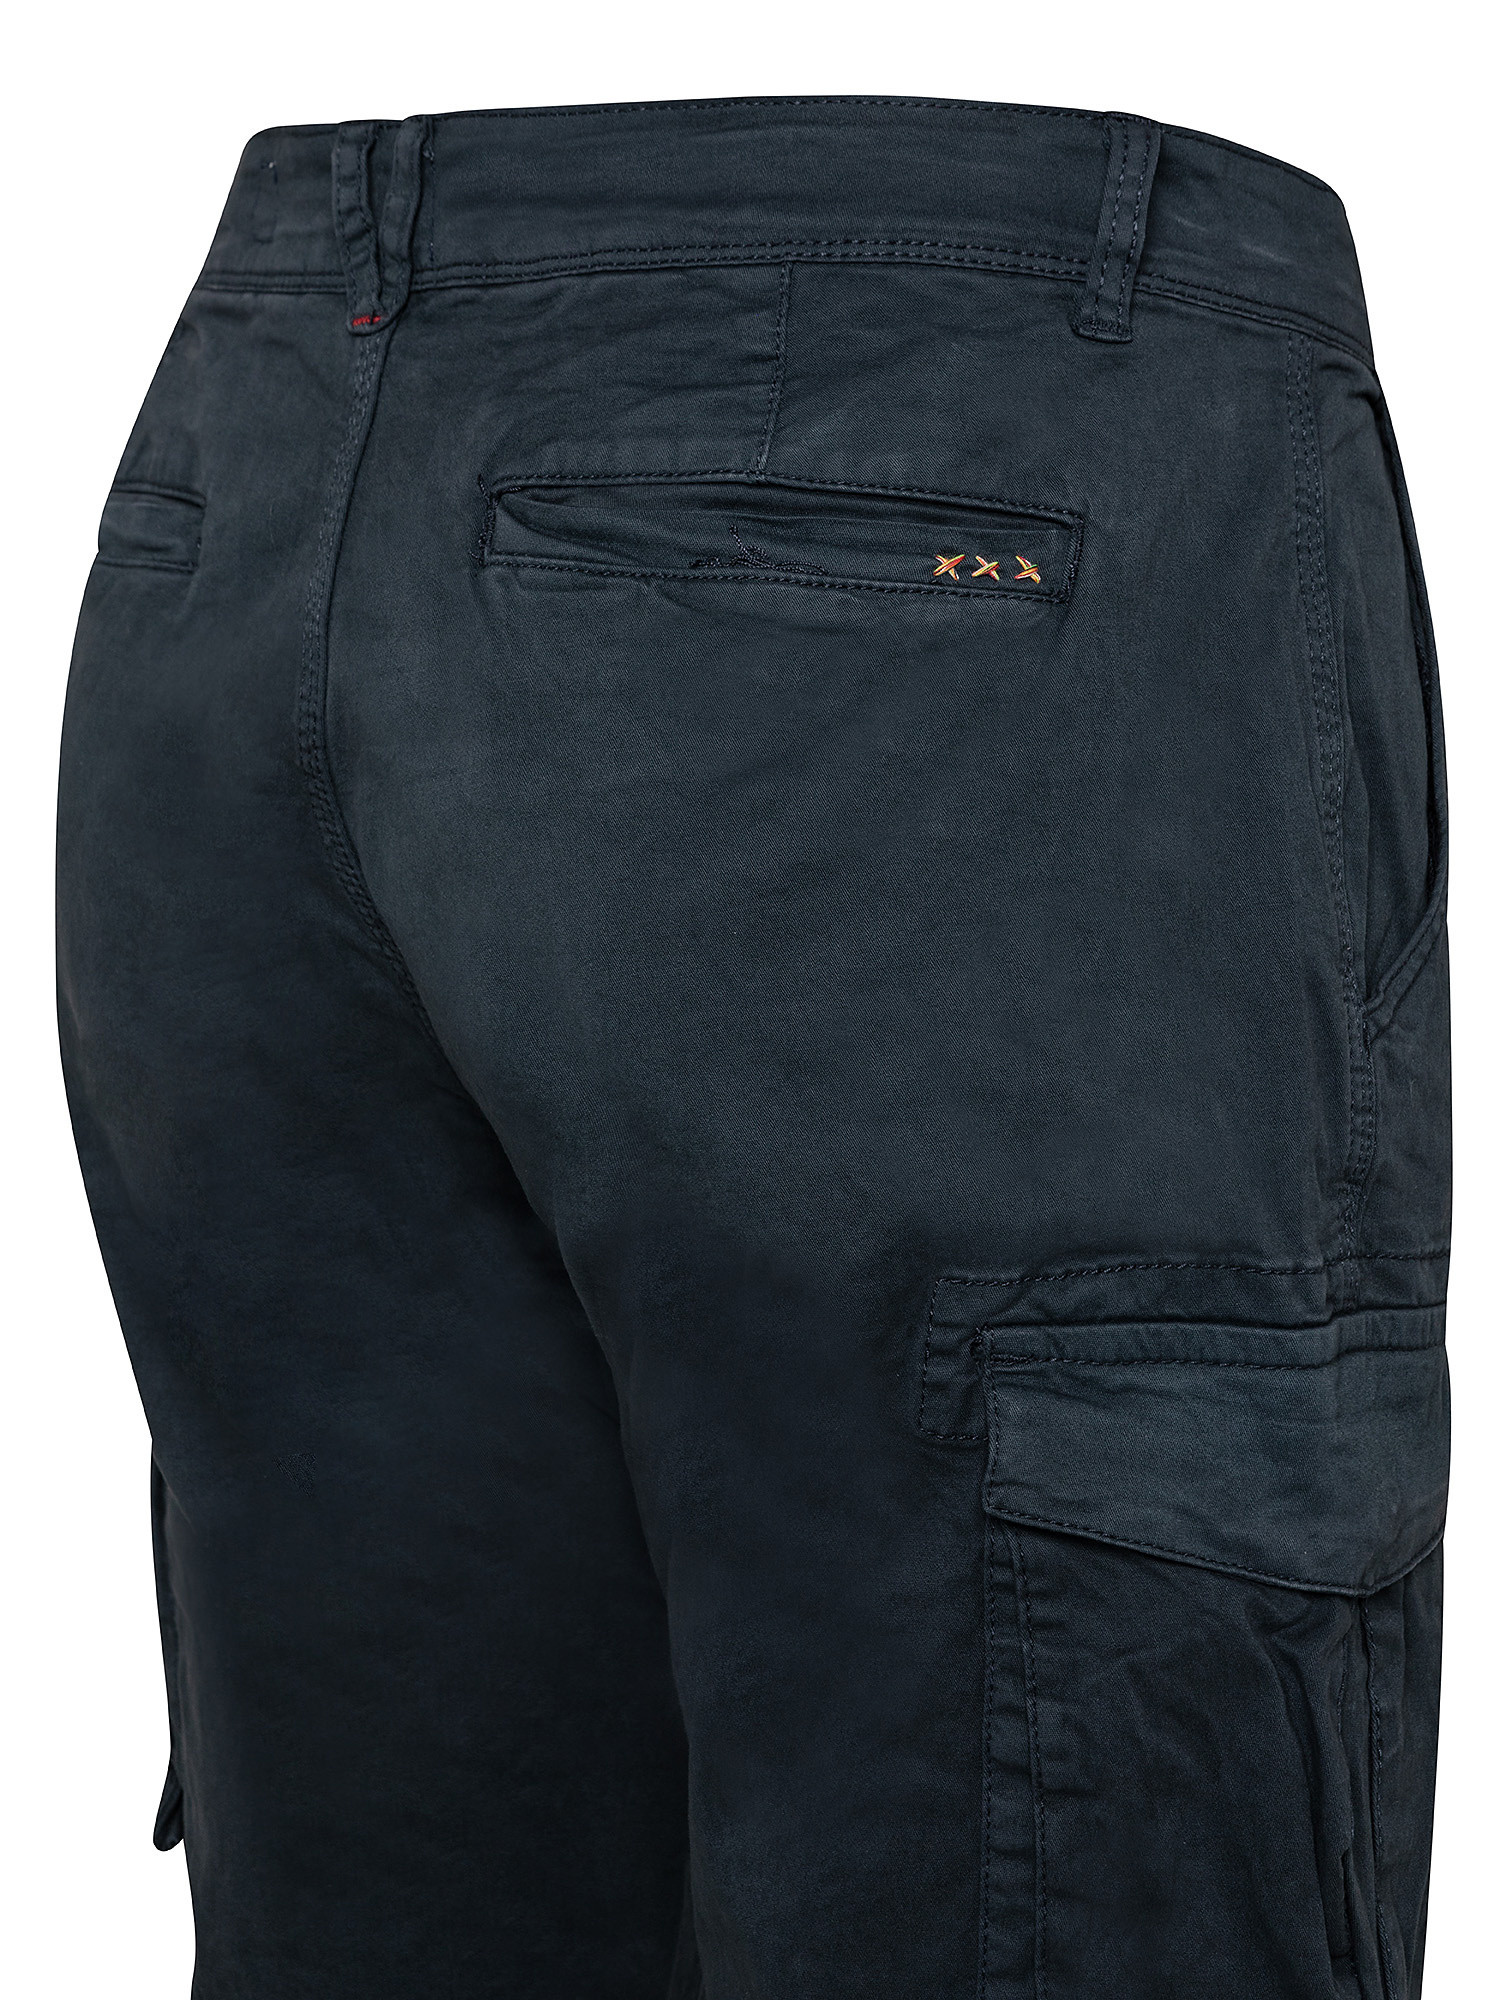 Pantalone cargo cotone stretch, Blu, large image number 2